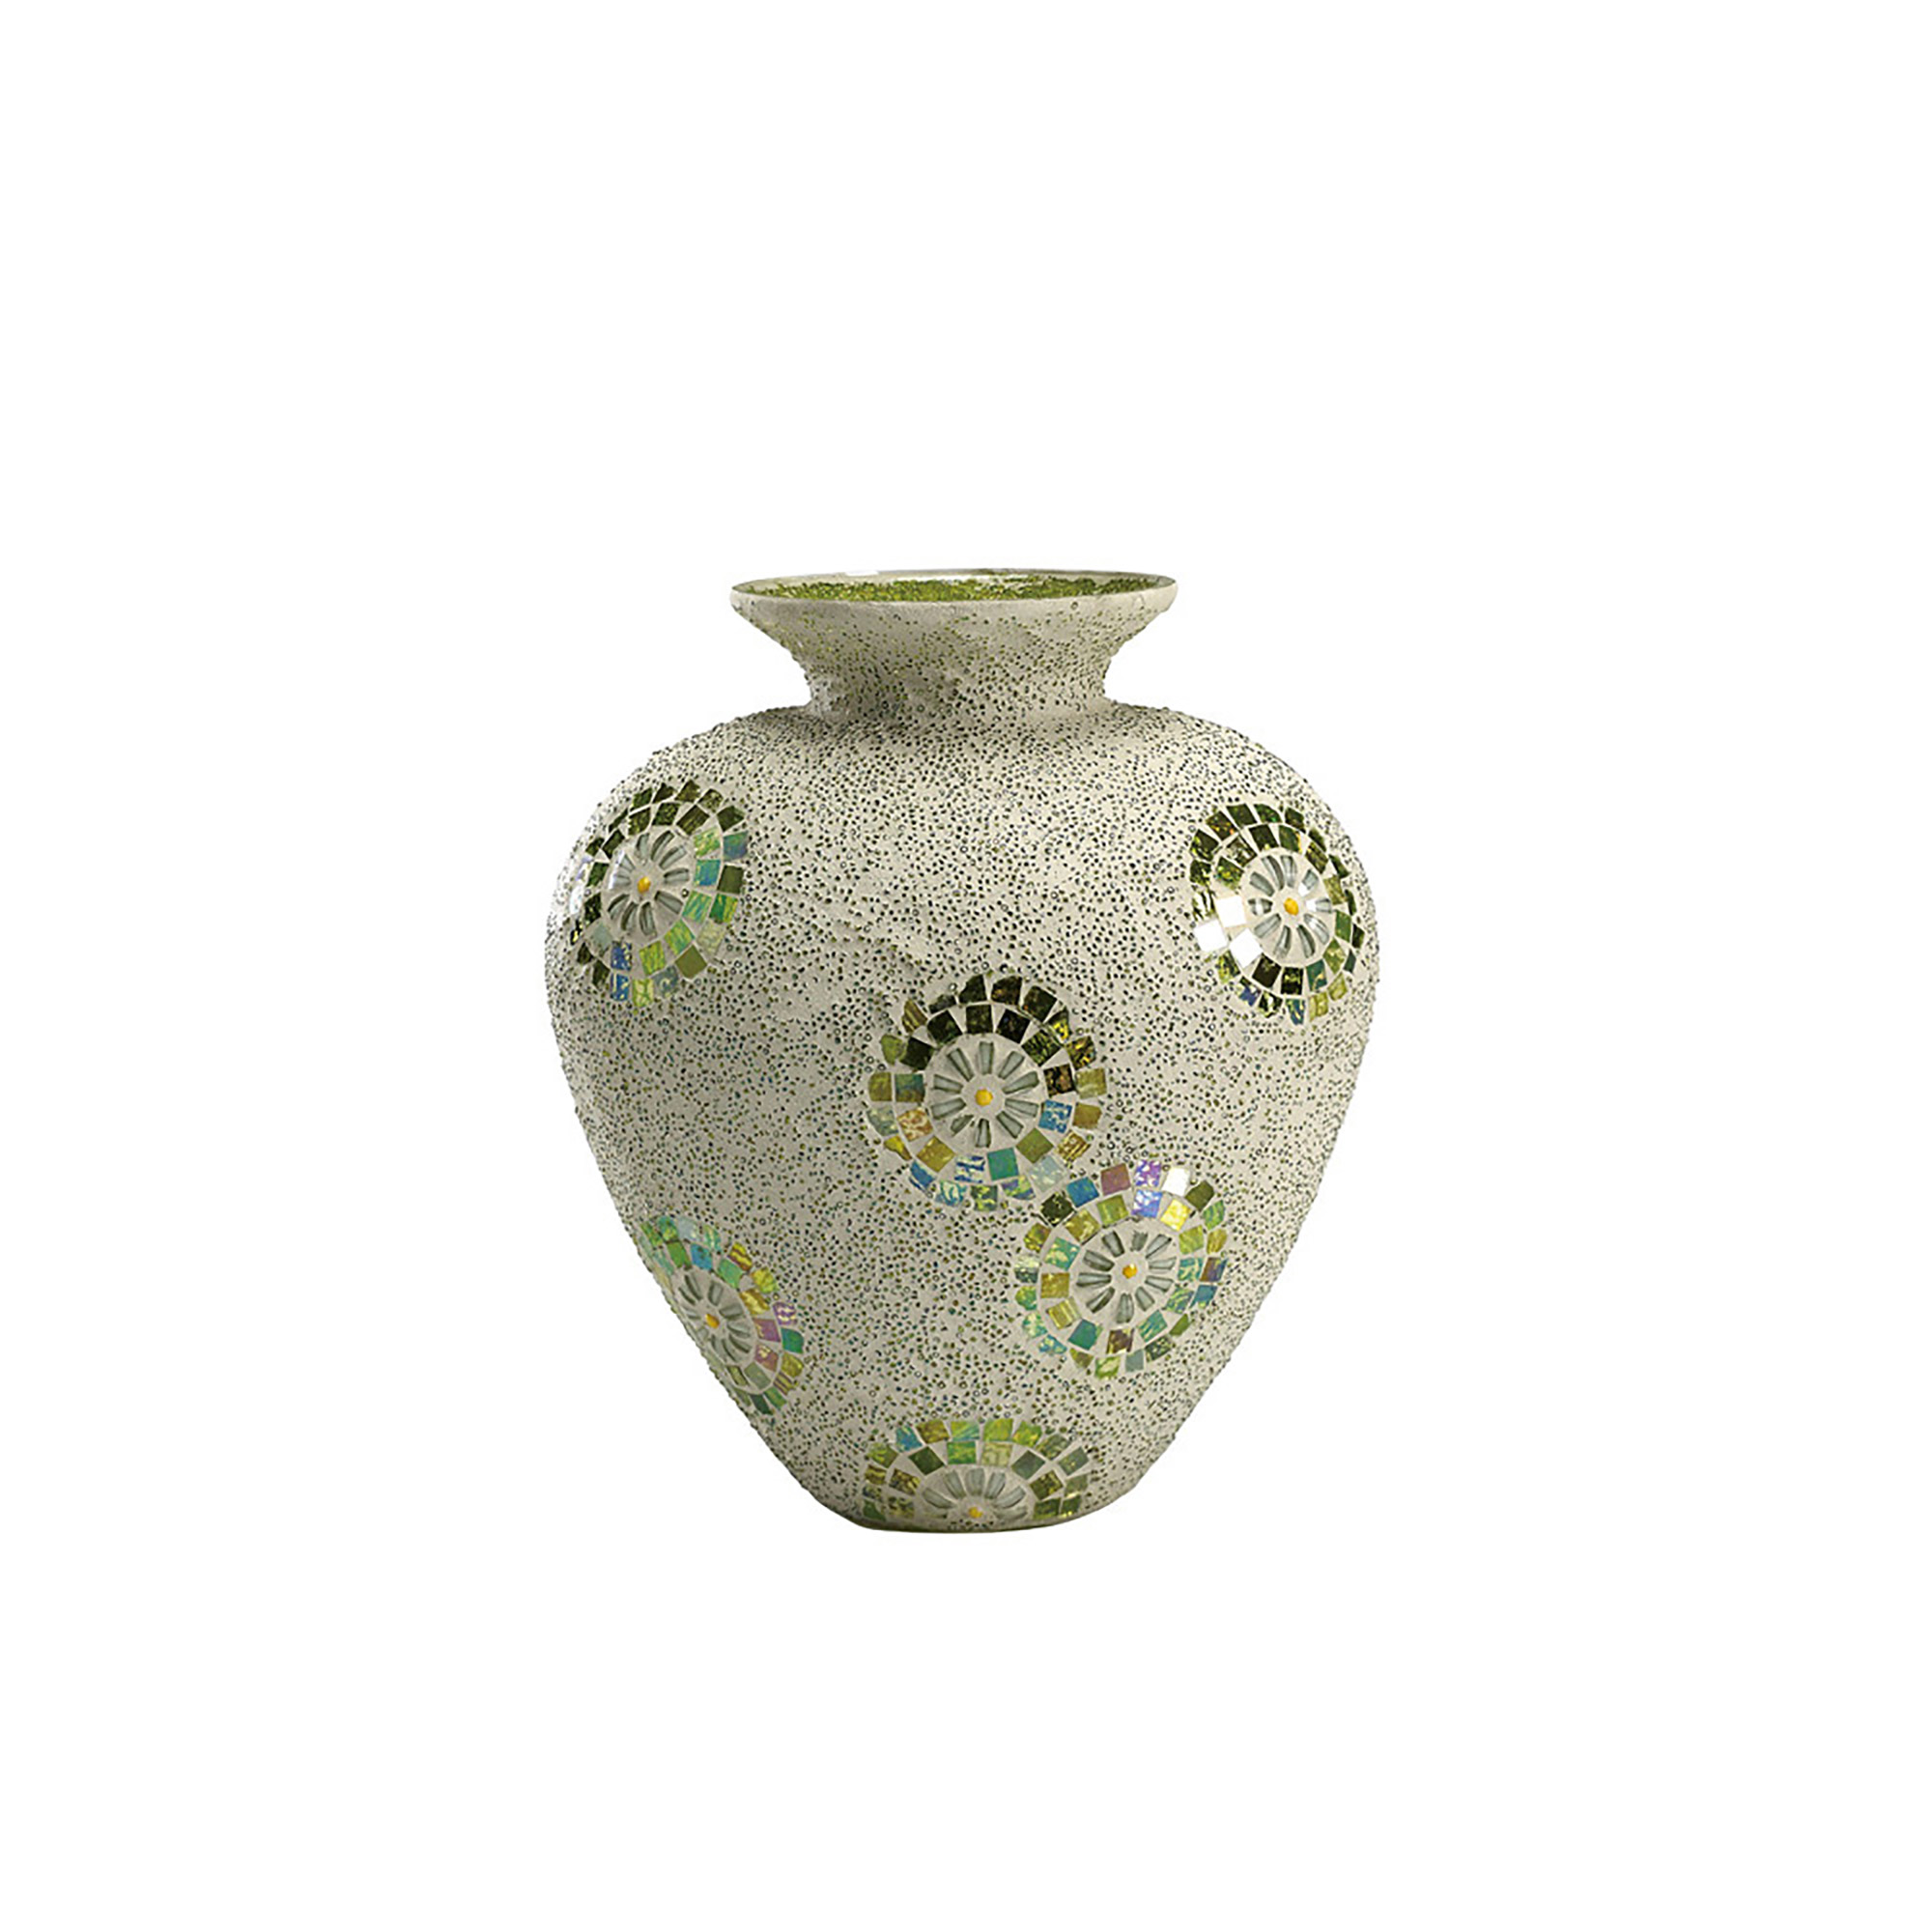 Floretta Mosaic Art Glassware Diyas Home Vases